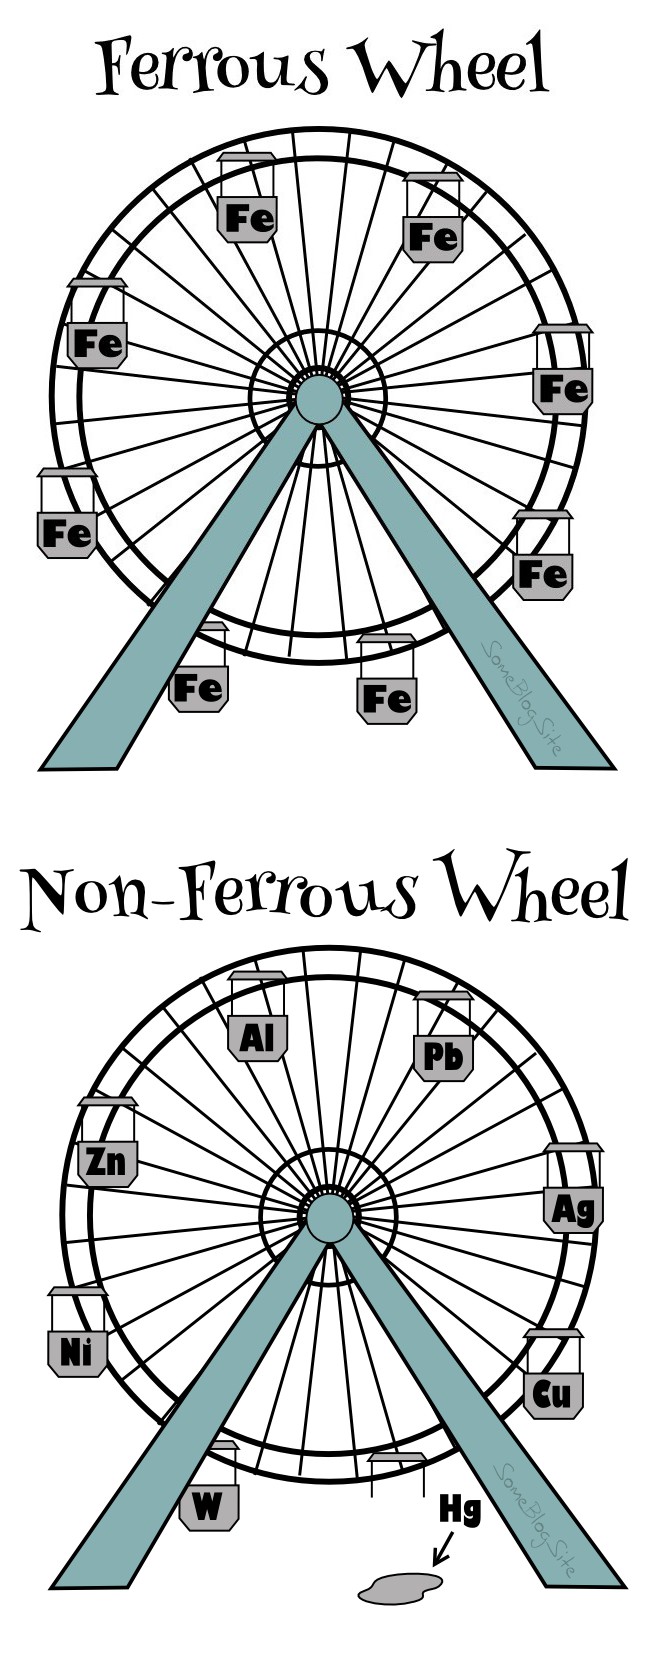 image of a ferrous wheel - a Ferris wheel made of iron (Fe) and a non-ferrous wheel - a Ferris wheel made of aluminum (Al), copper (Cu), lead (Pb), nickel (Ni), zinc (Zn), tungsten (W), mercury (Hg), and silver (Ag).